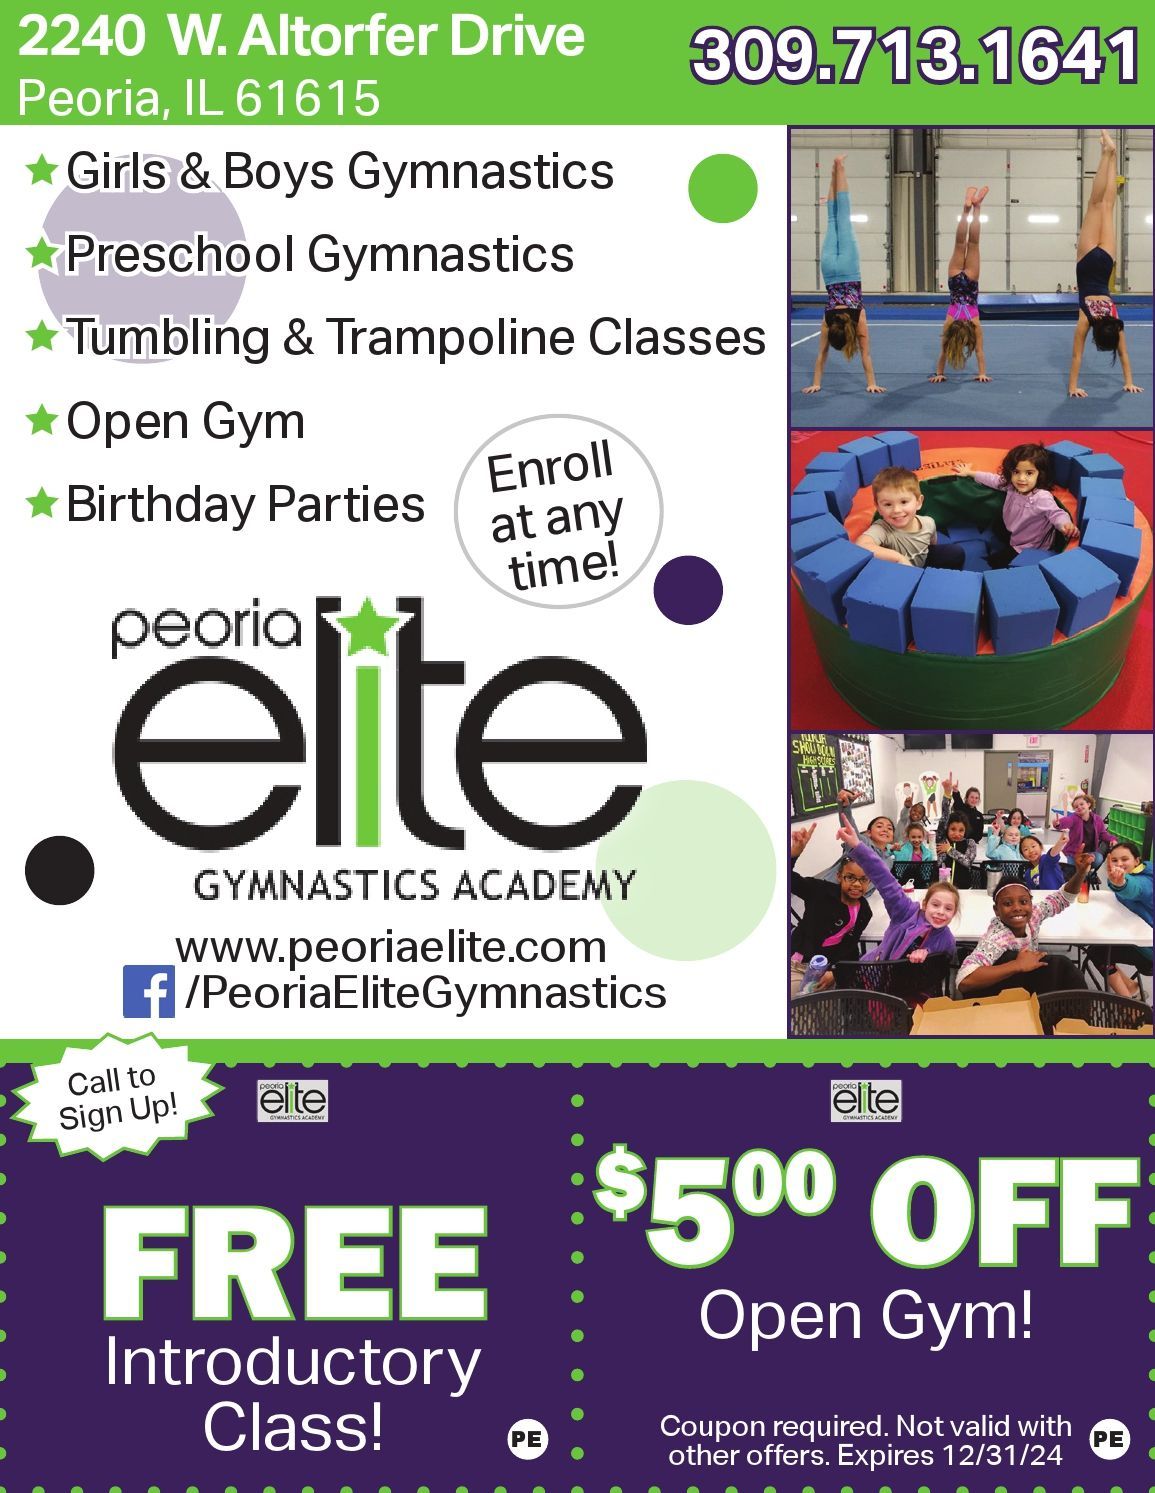 Peoria Elite Gymnastics Academy coupon $5 off Peoria, IL